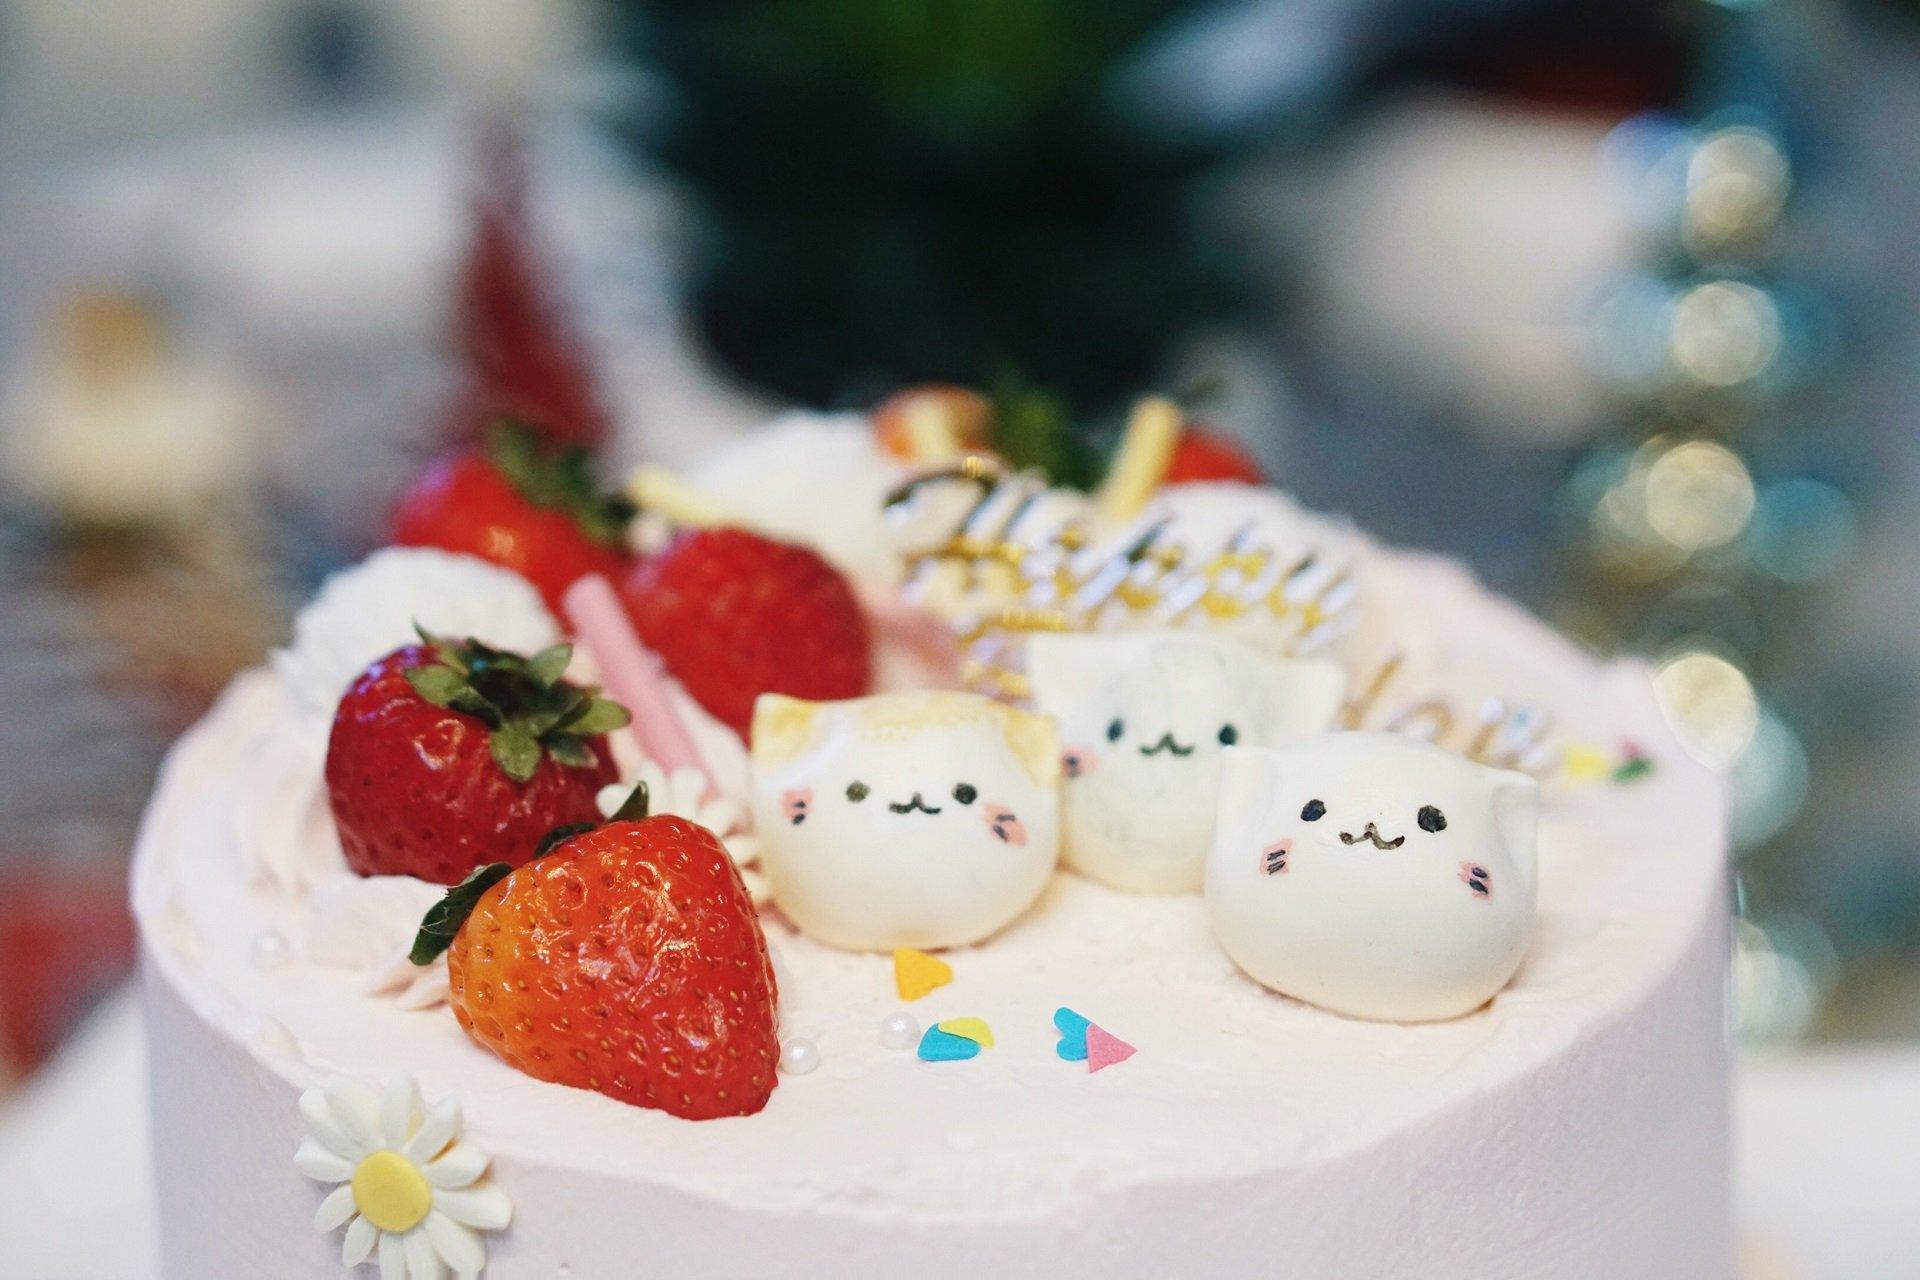 Strawberry Cats - Cake - Dessert - Birthday - Event -The Place Toronto